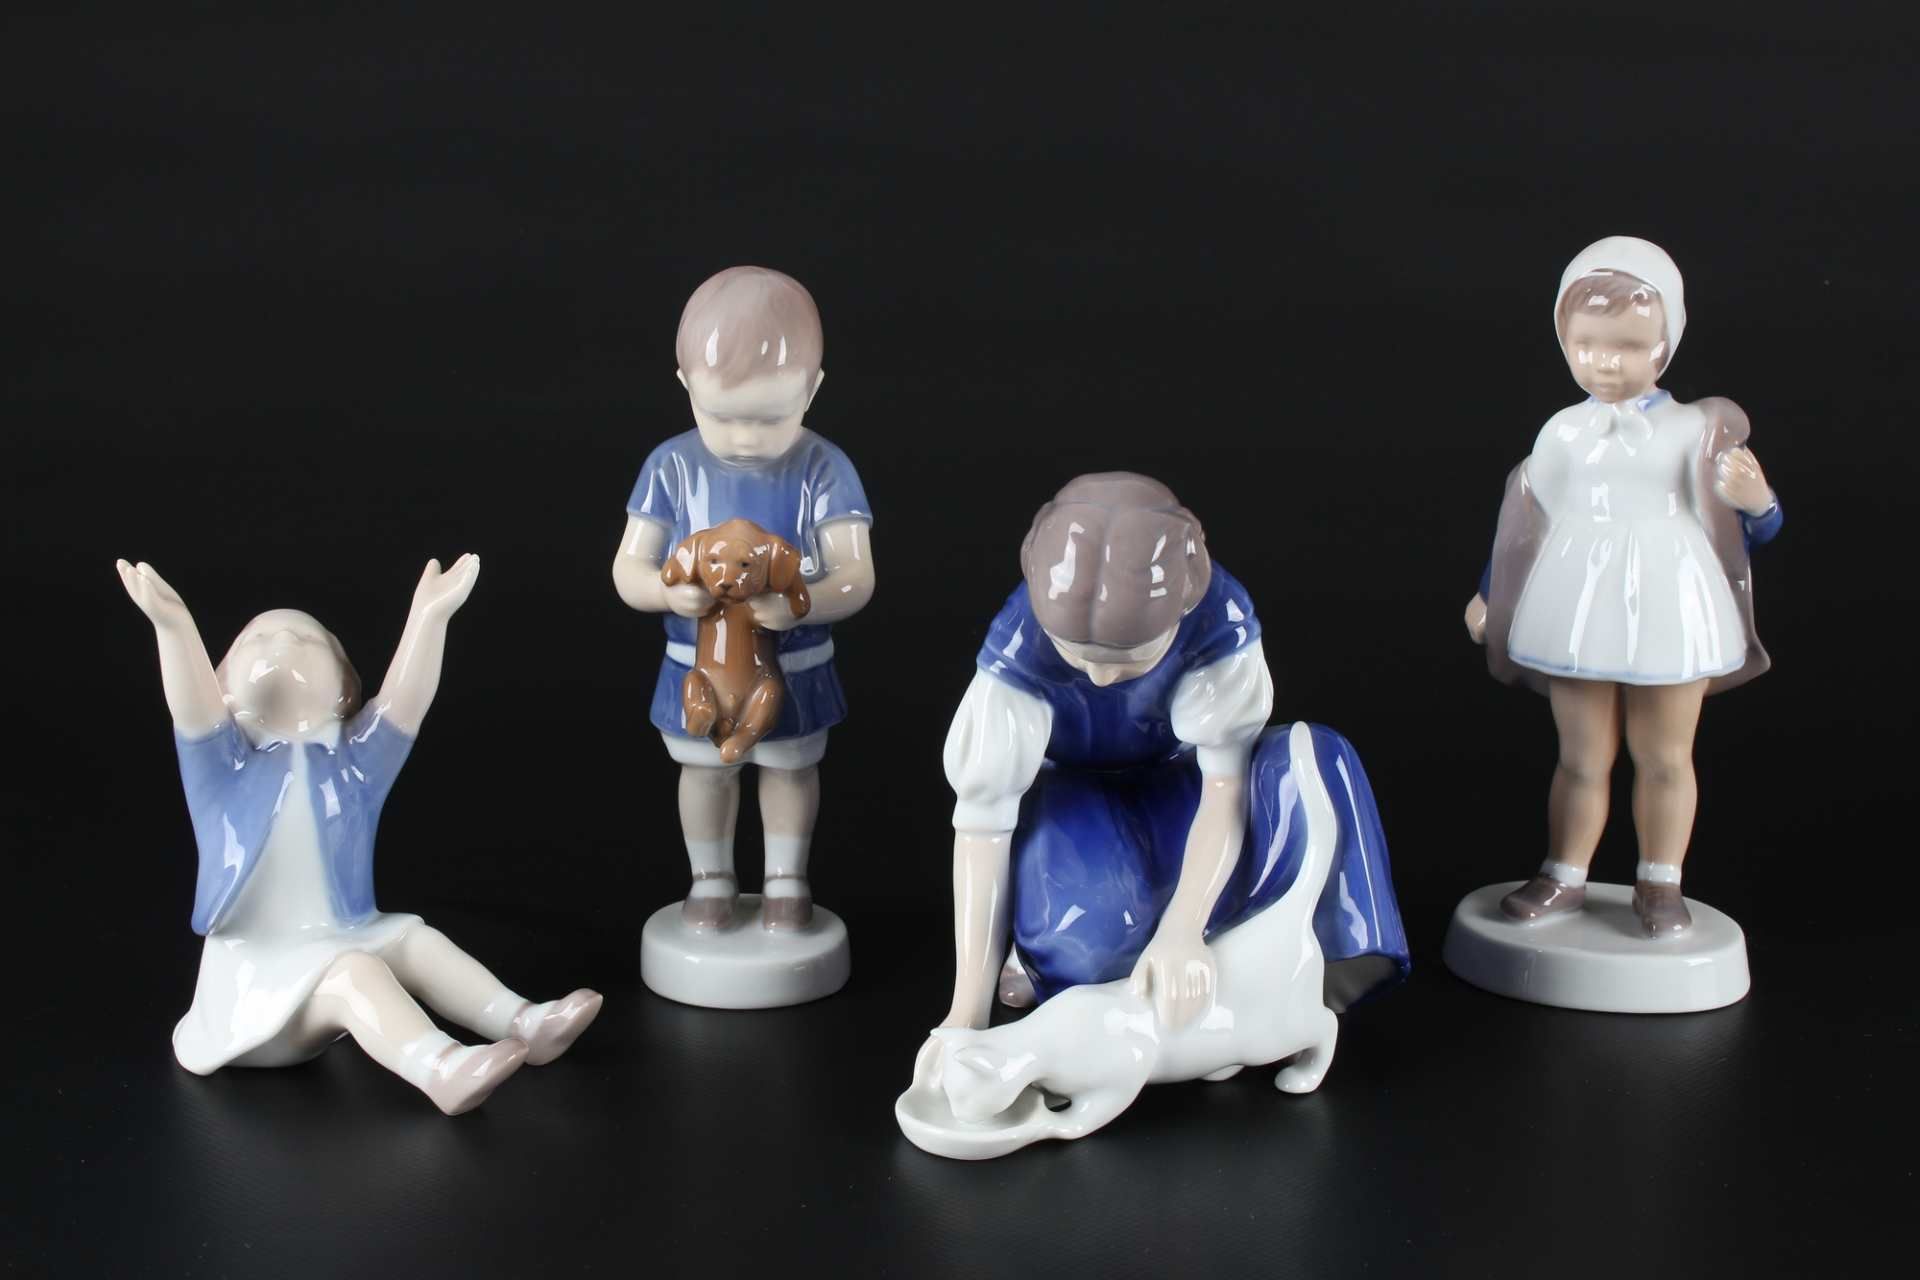 Bing & Gröndahl 4 Porzellanfiguren, figures of children,